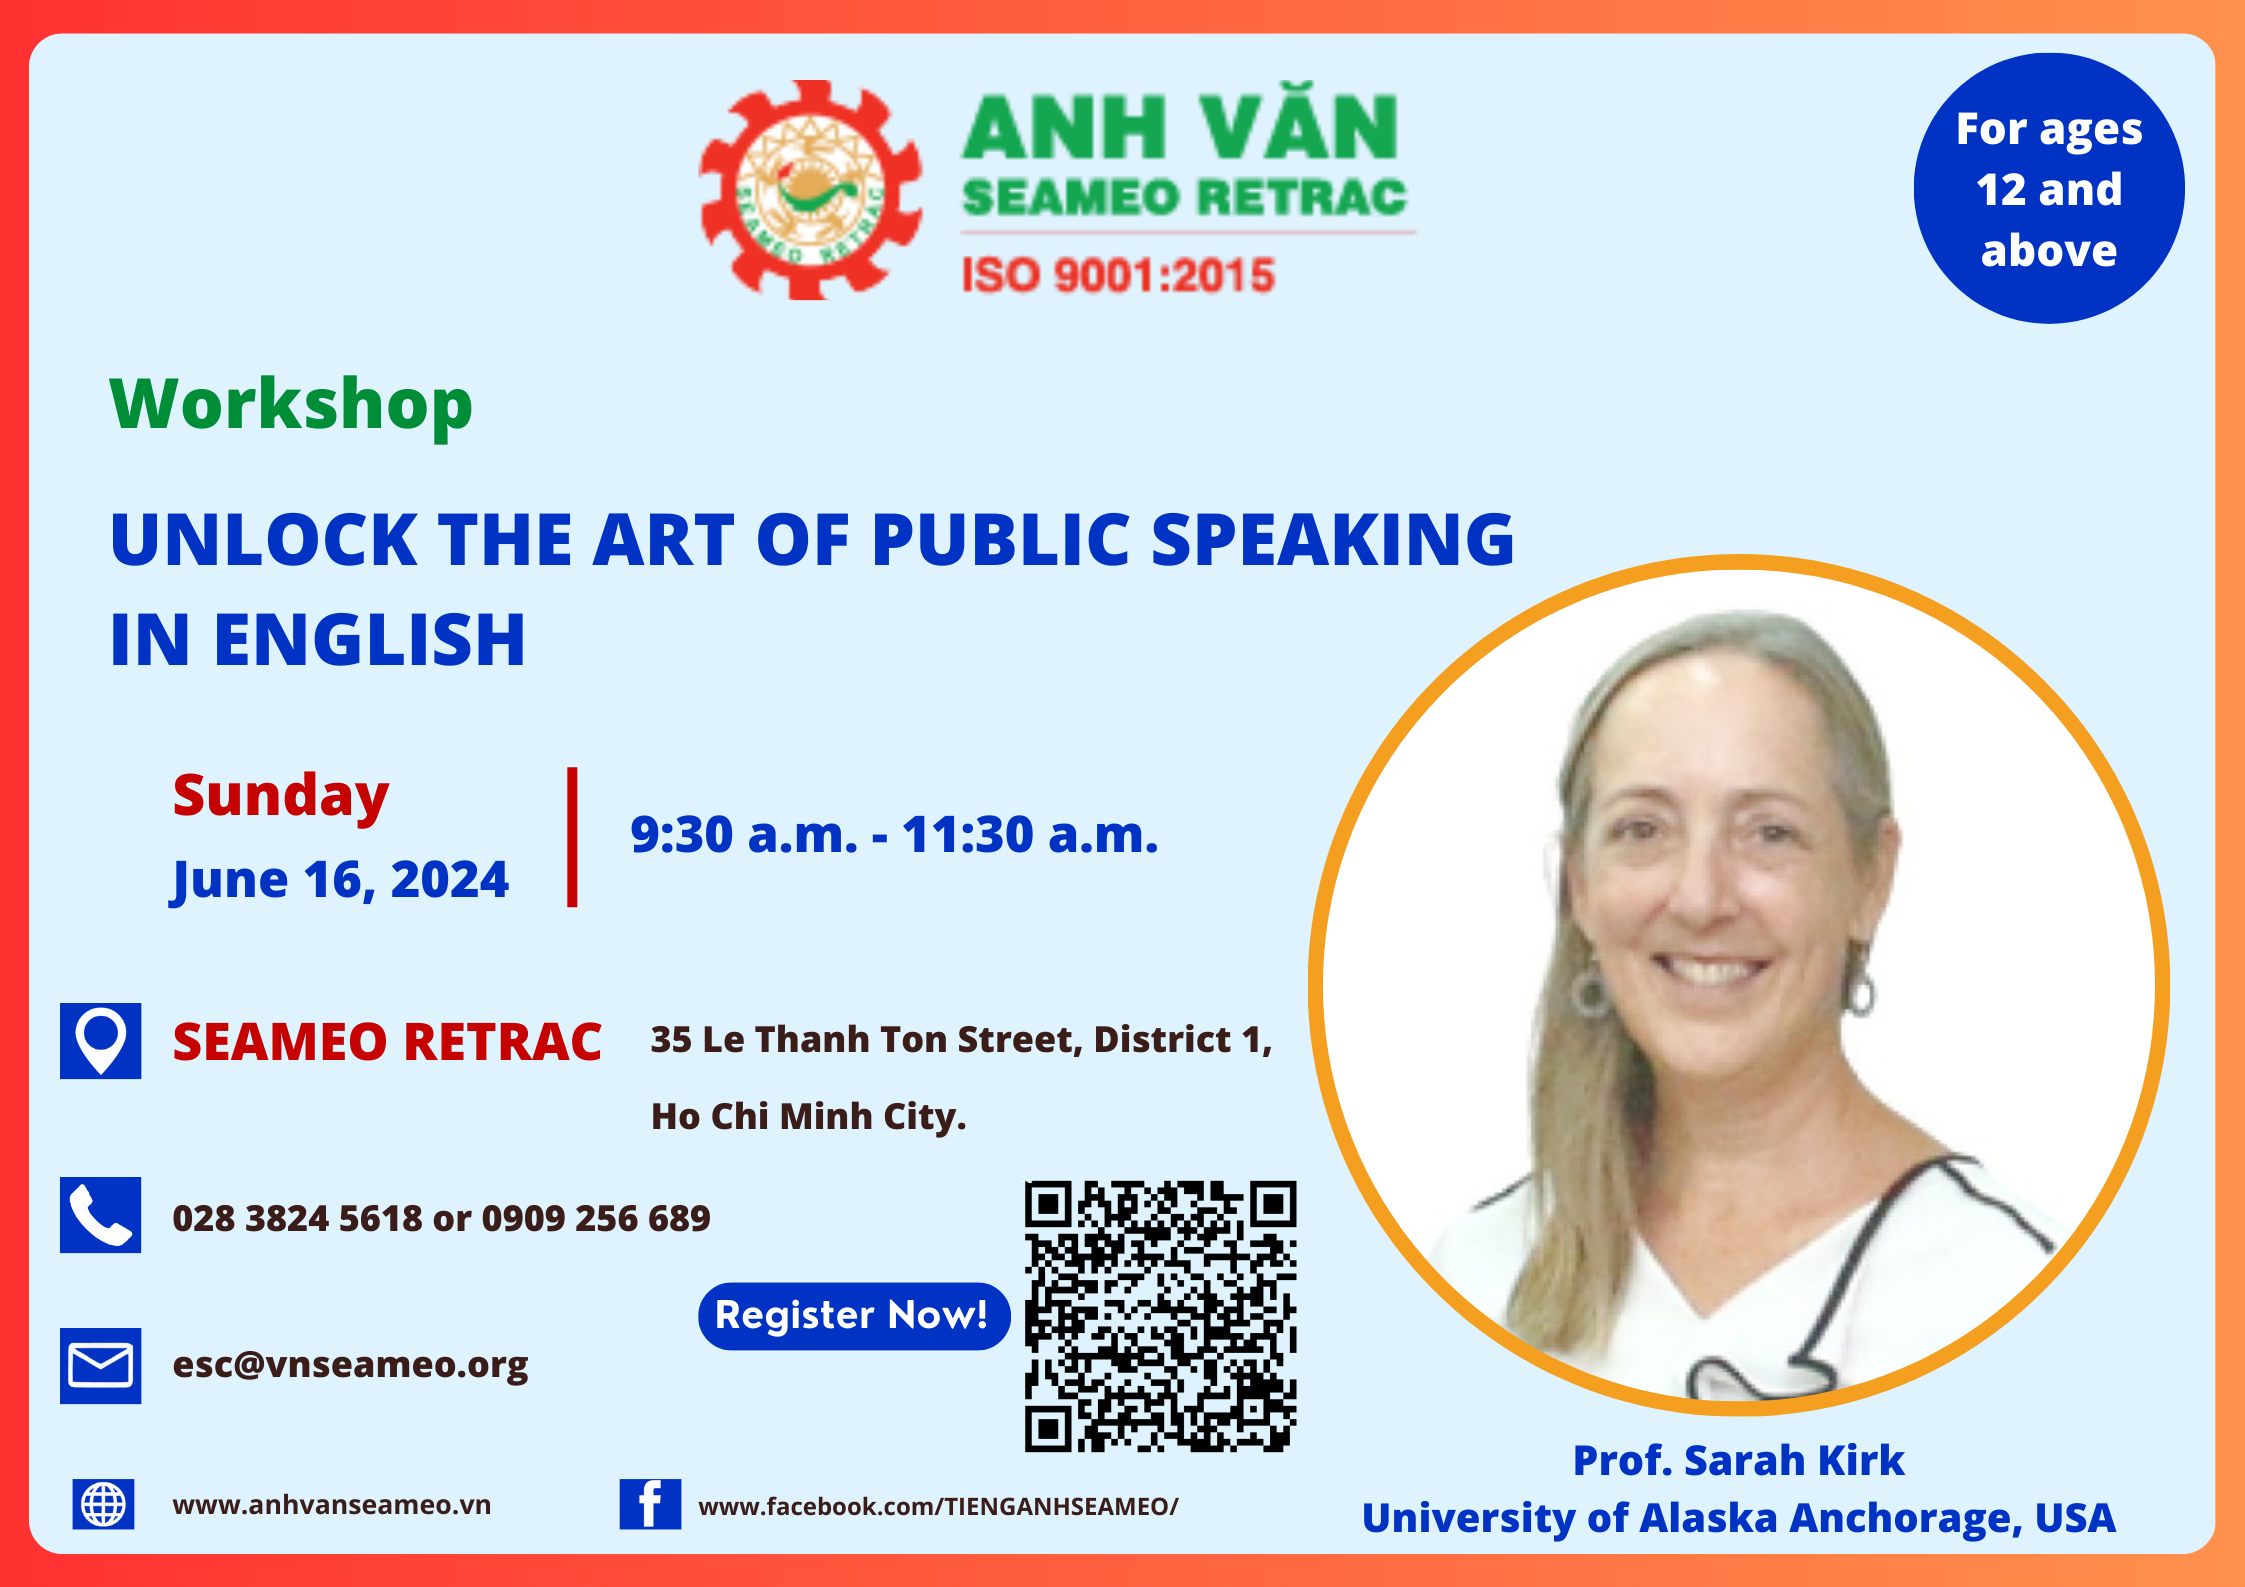 Workshop “Unlock the Art of Public Speaking in English”